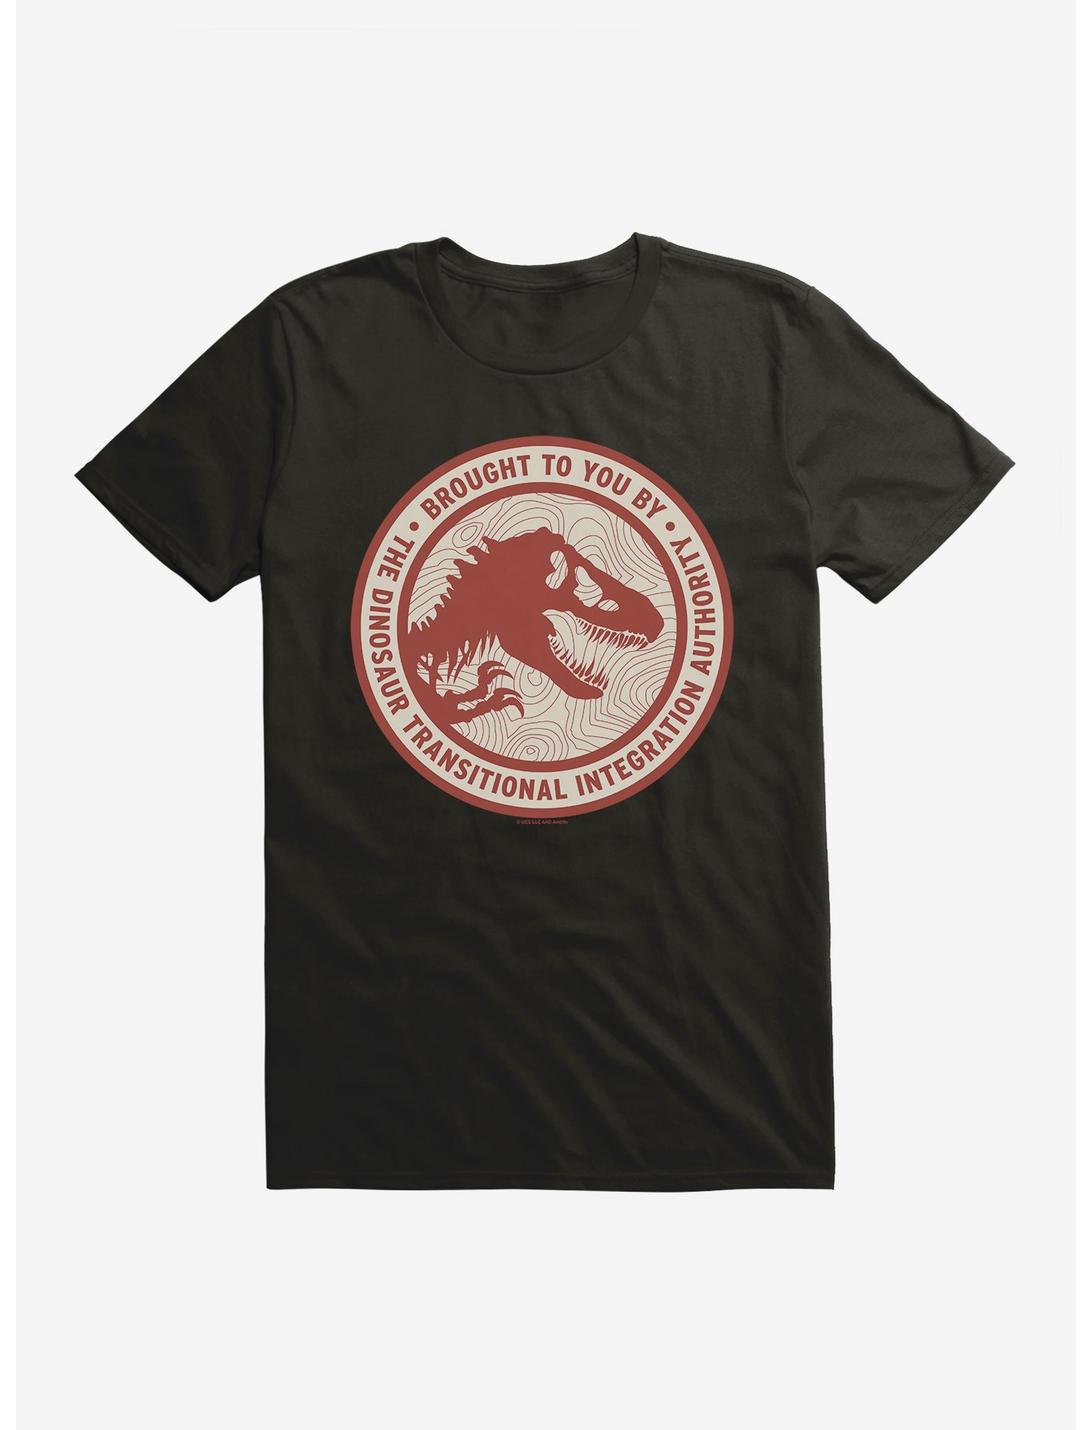 Jurassic World Dominion Dinosaur Authority T-Shirt, , hi-res